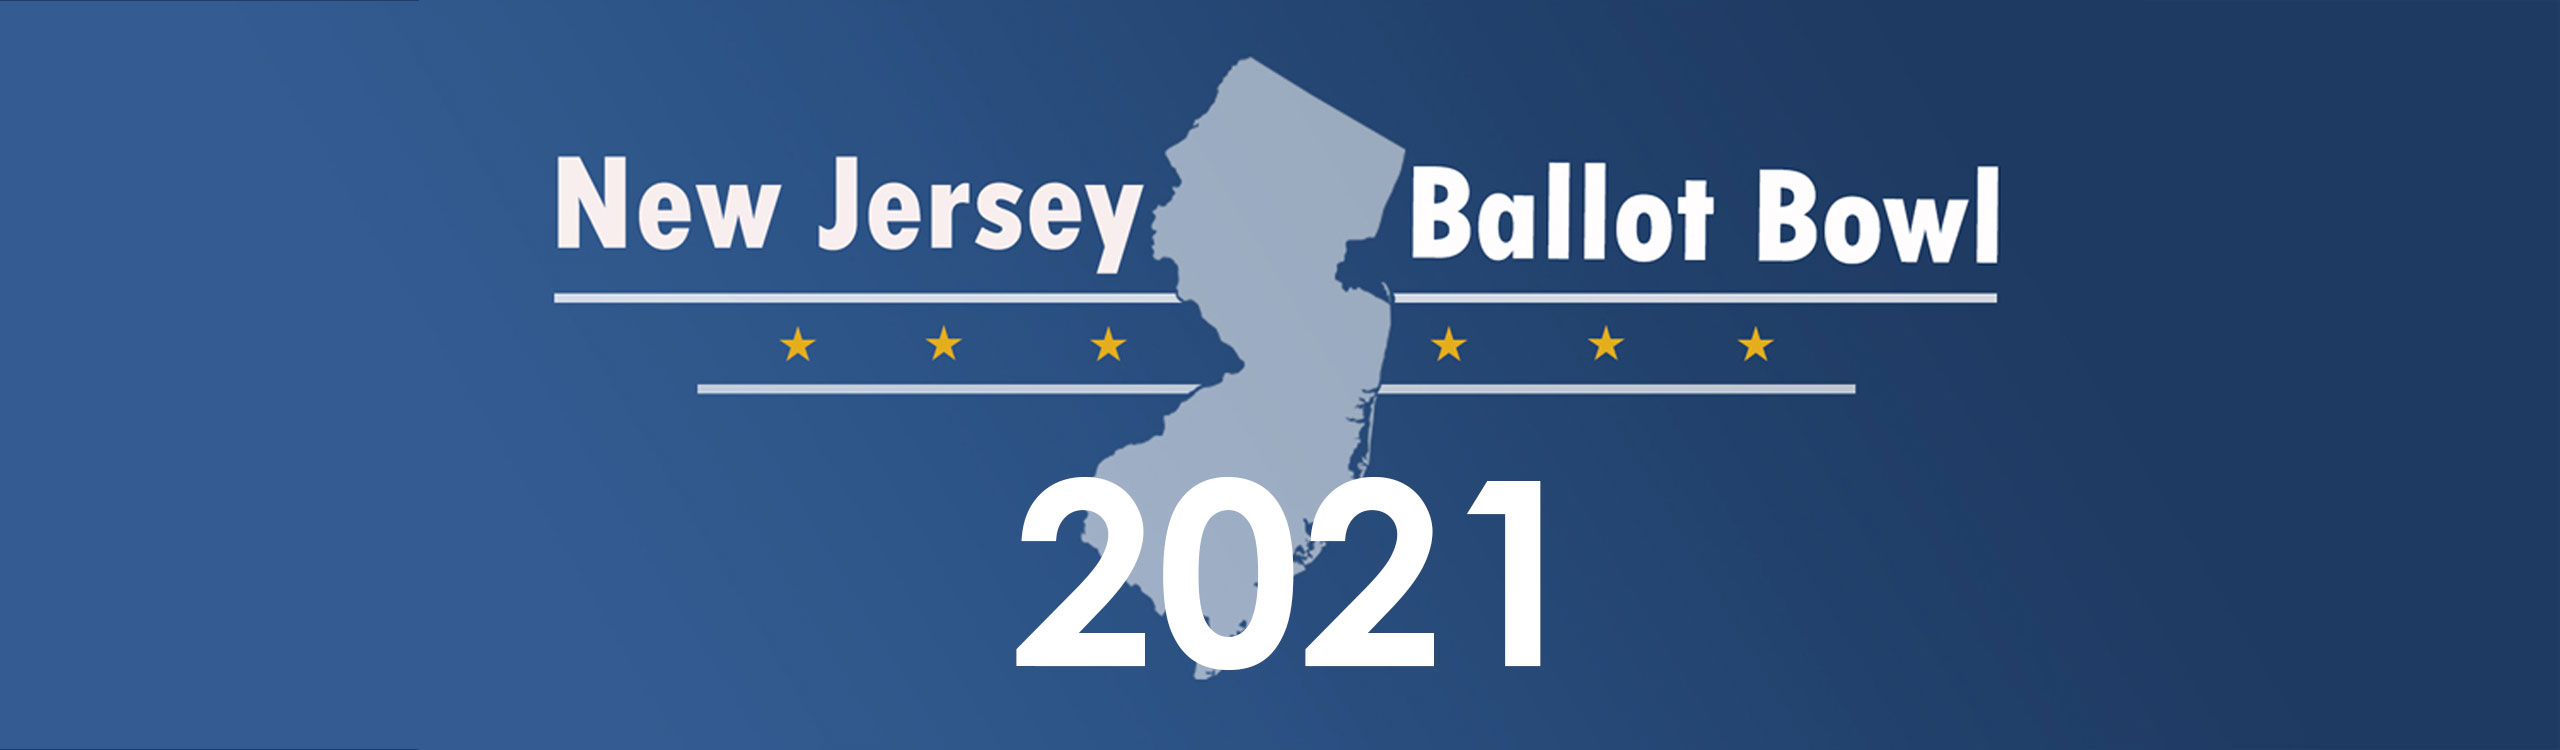 2021 New Jersey Ballot Bowl